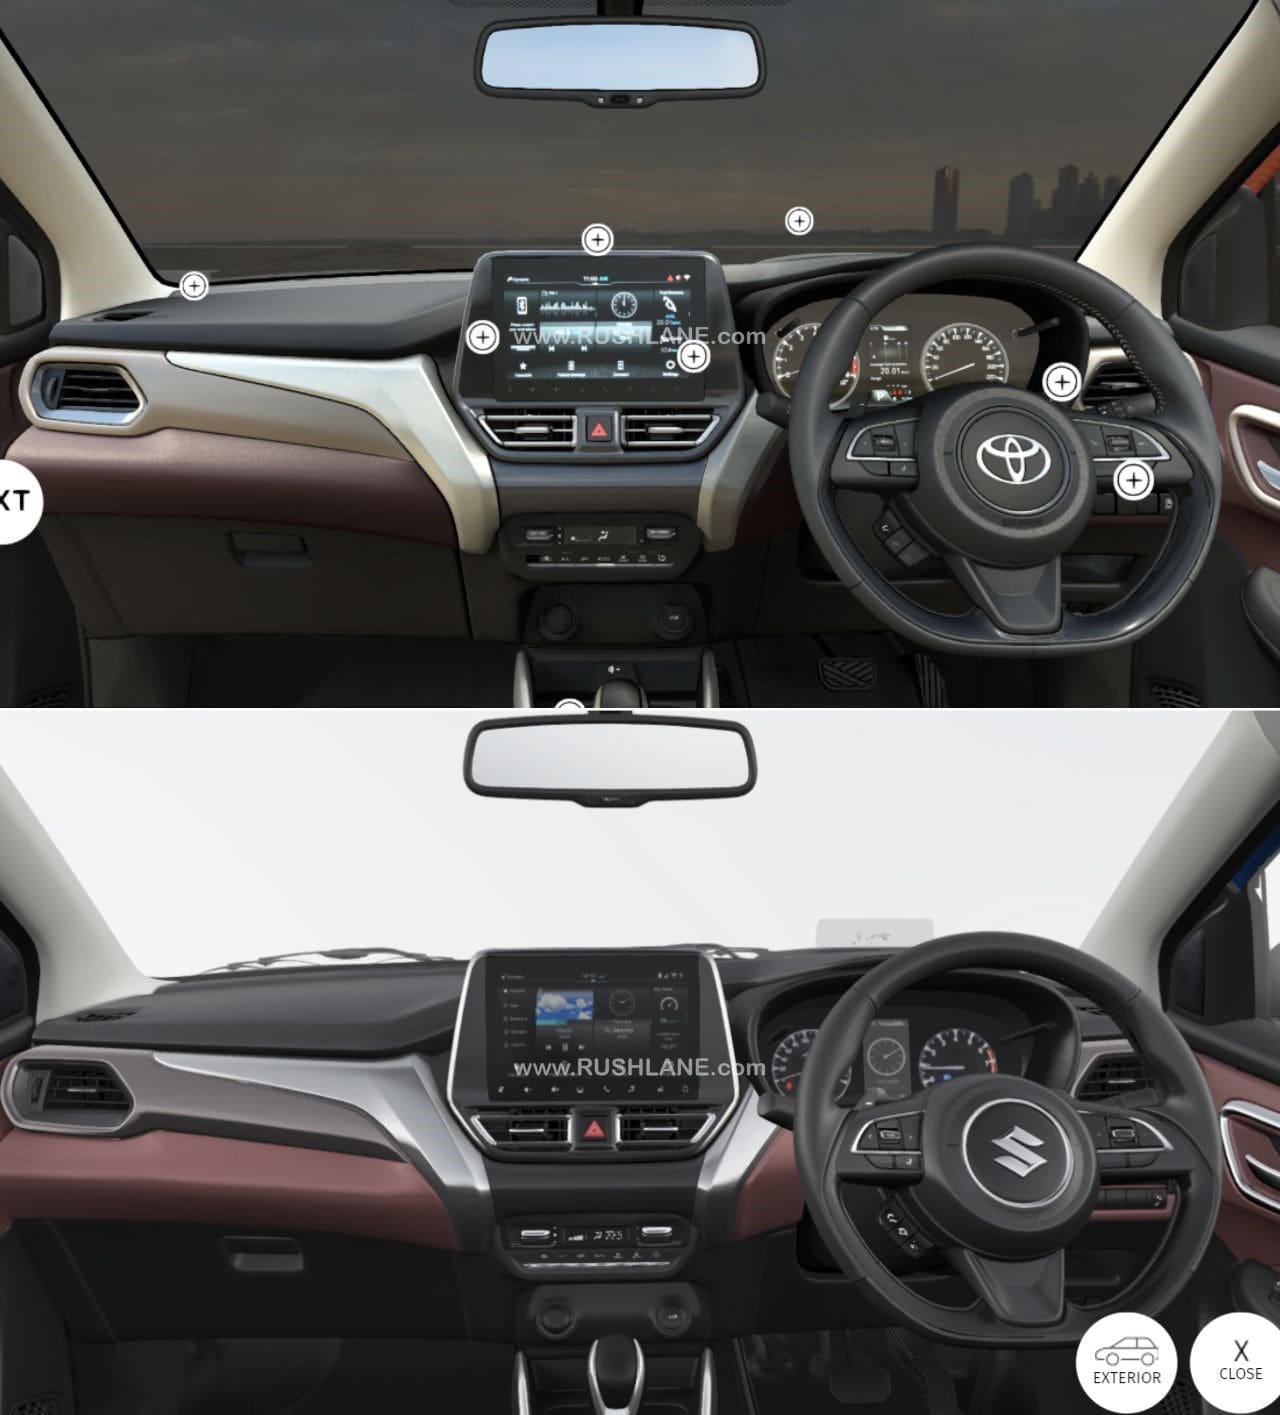 Toyota Taisor vs Maruti Fronx - Interior